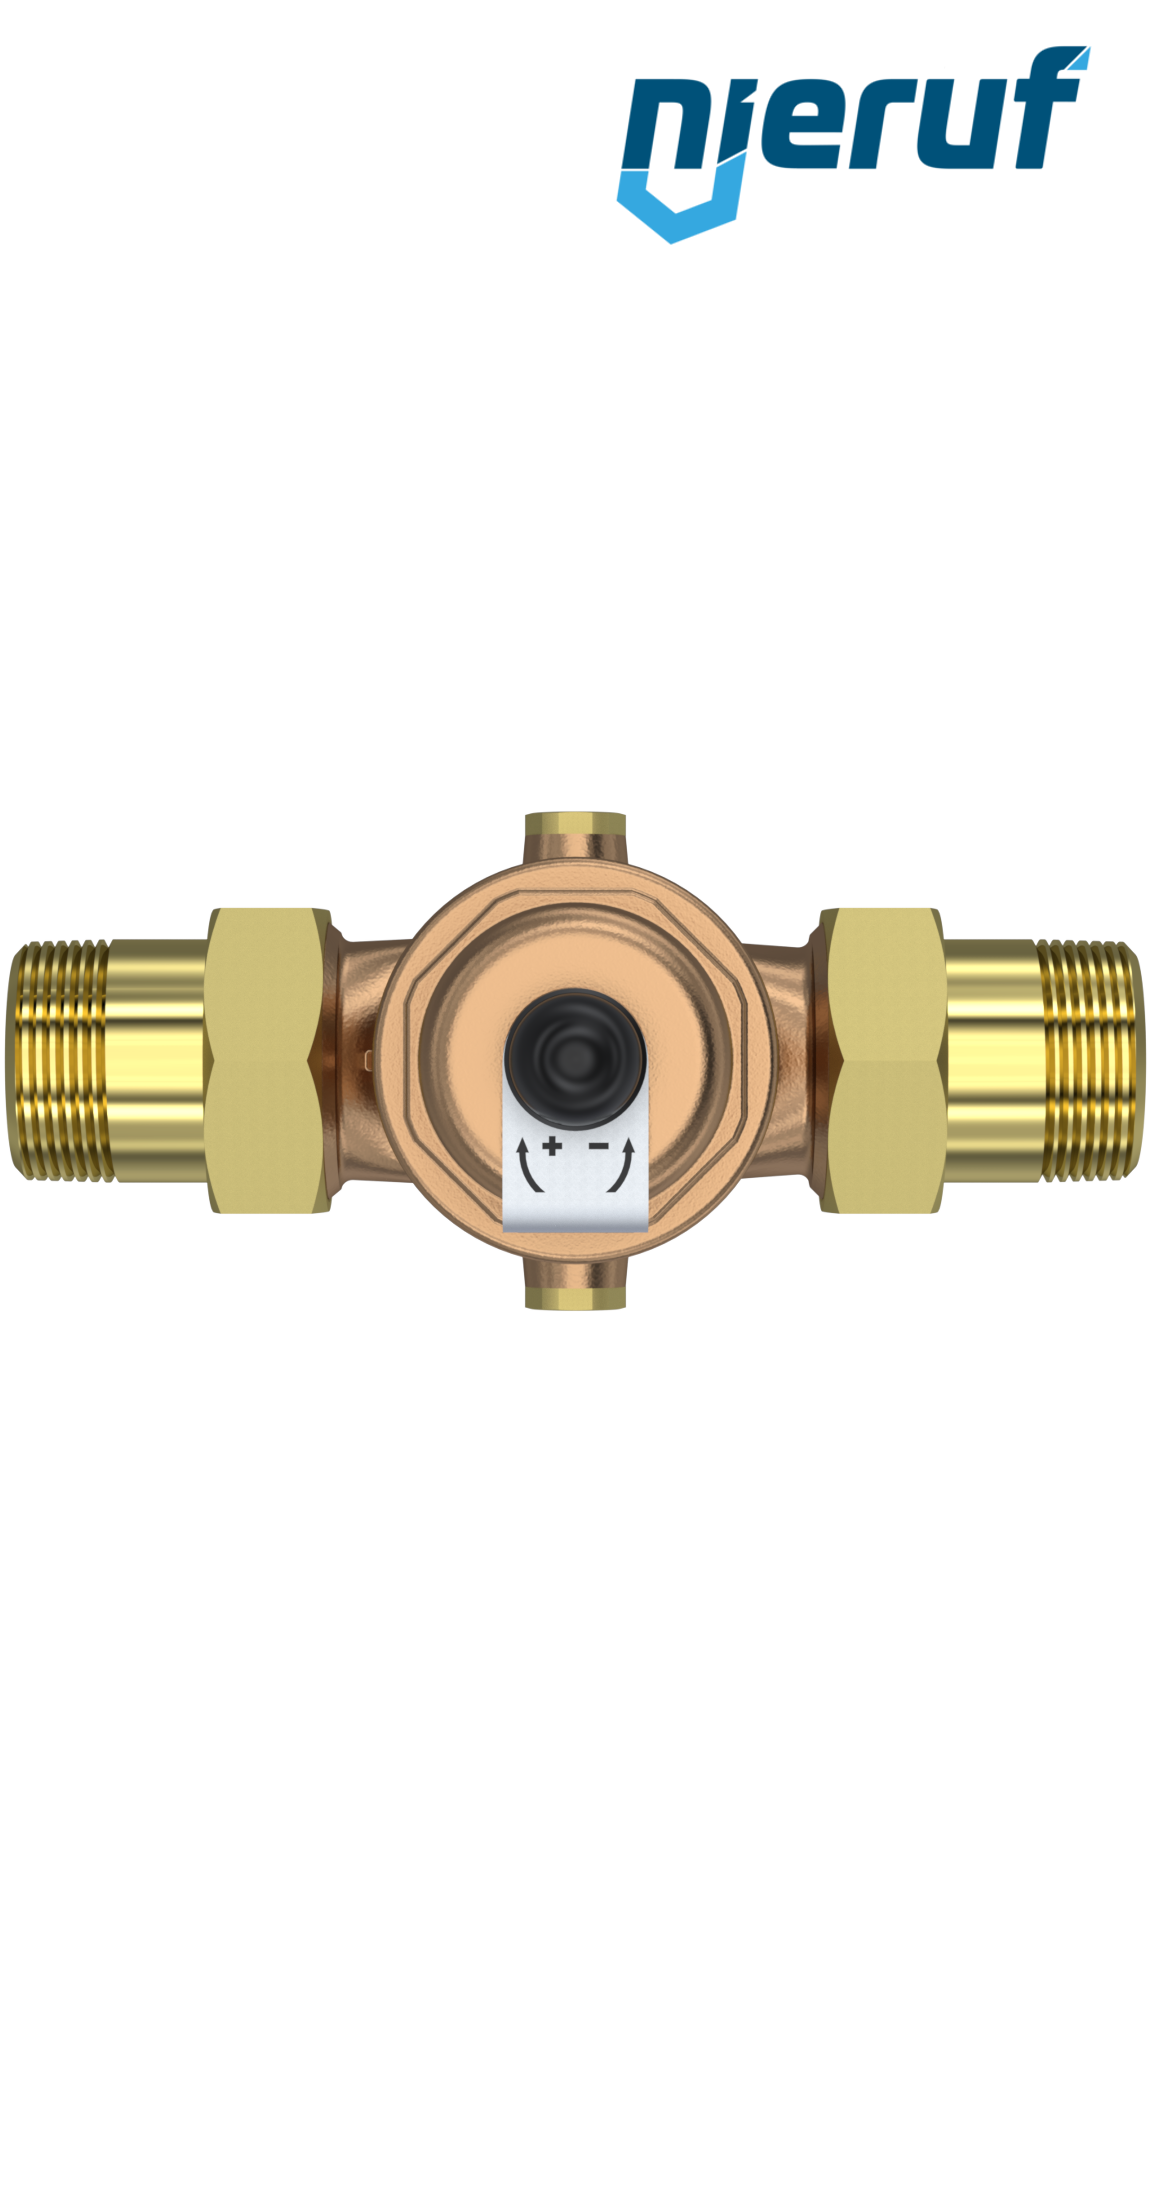 pressure reducing valve 3/4" inch male thread DM02 gunmetal FKM 0.5 - 2.0 bar